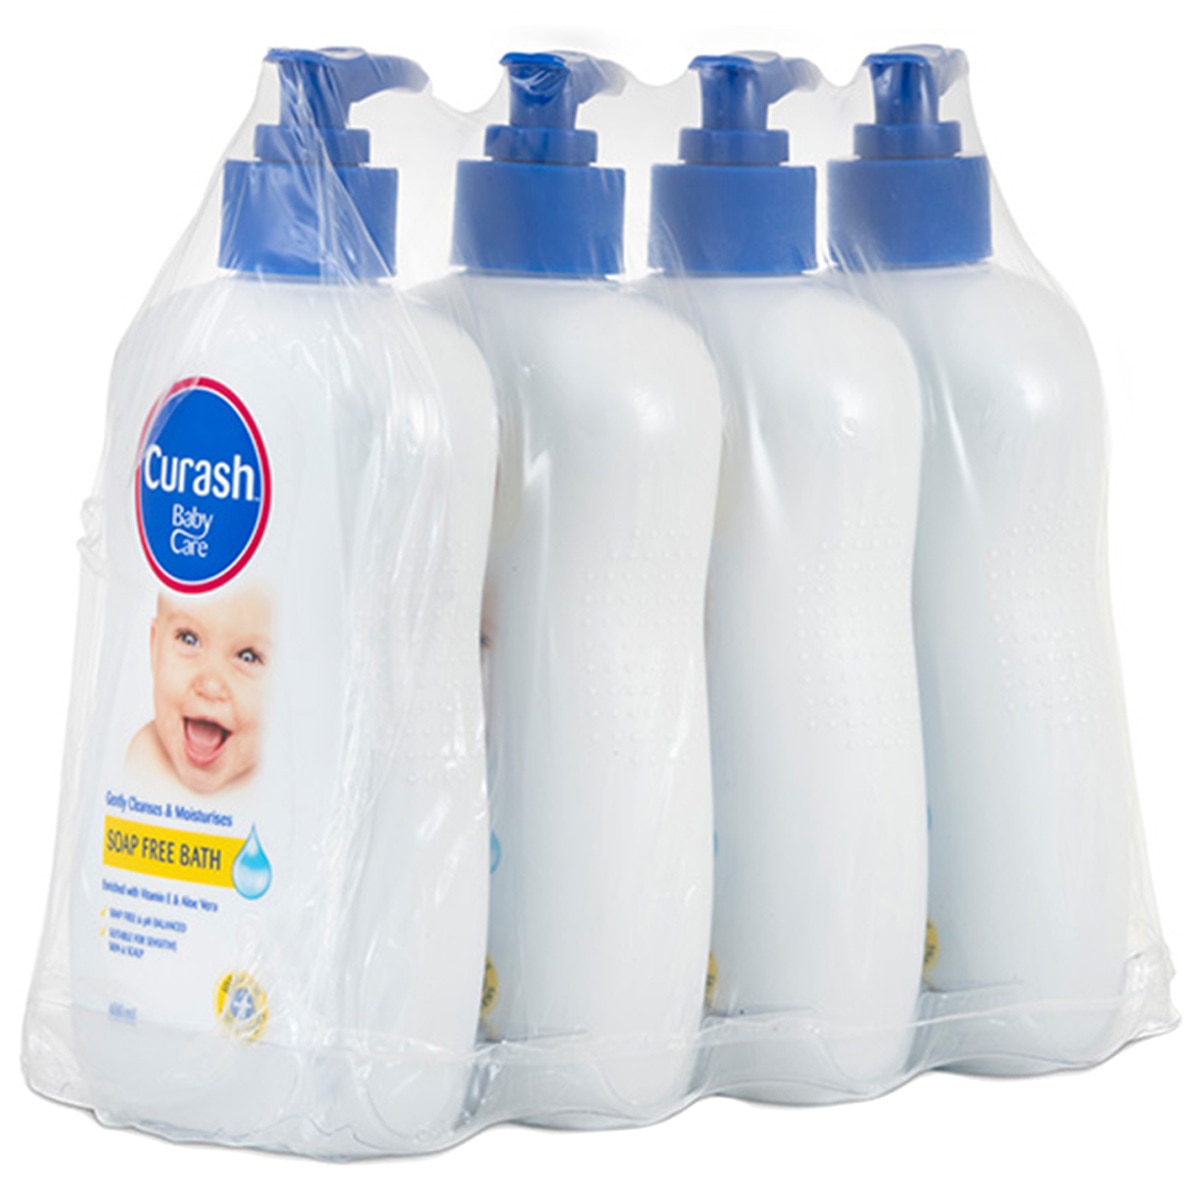 Curash Soap Free Baby - 4 X 400ml